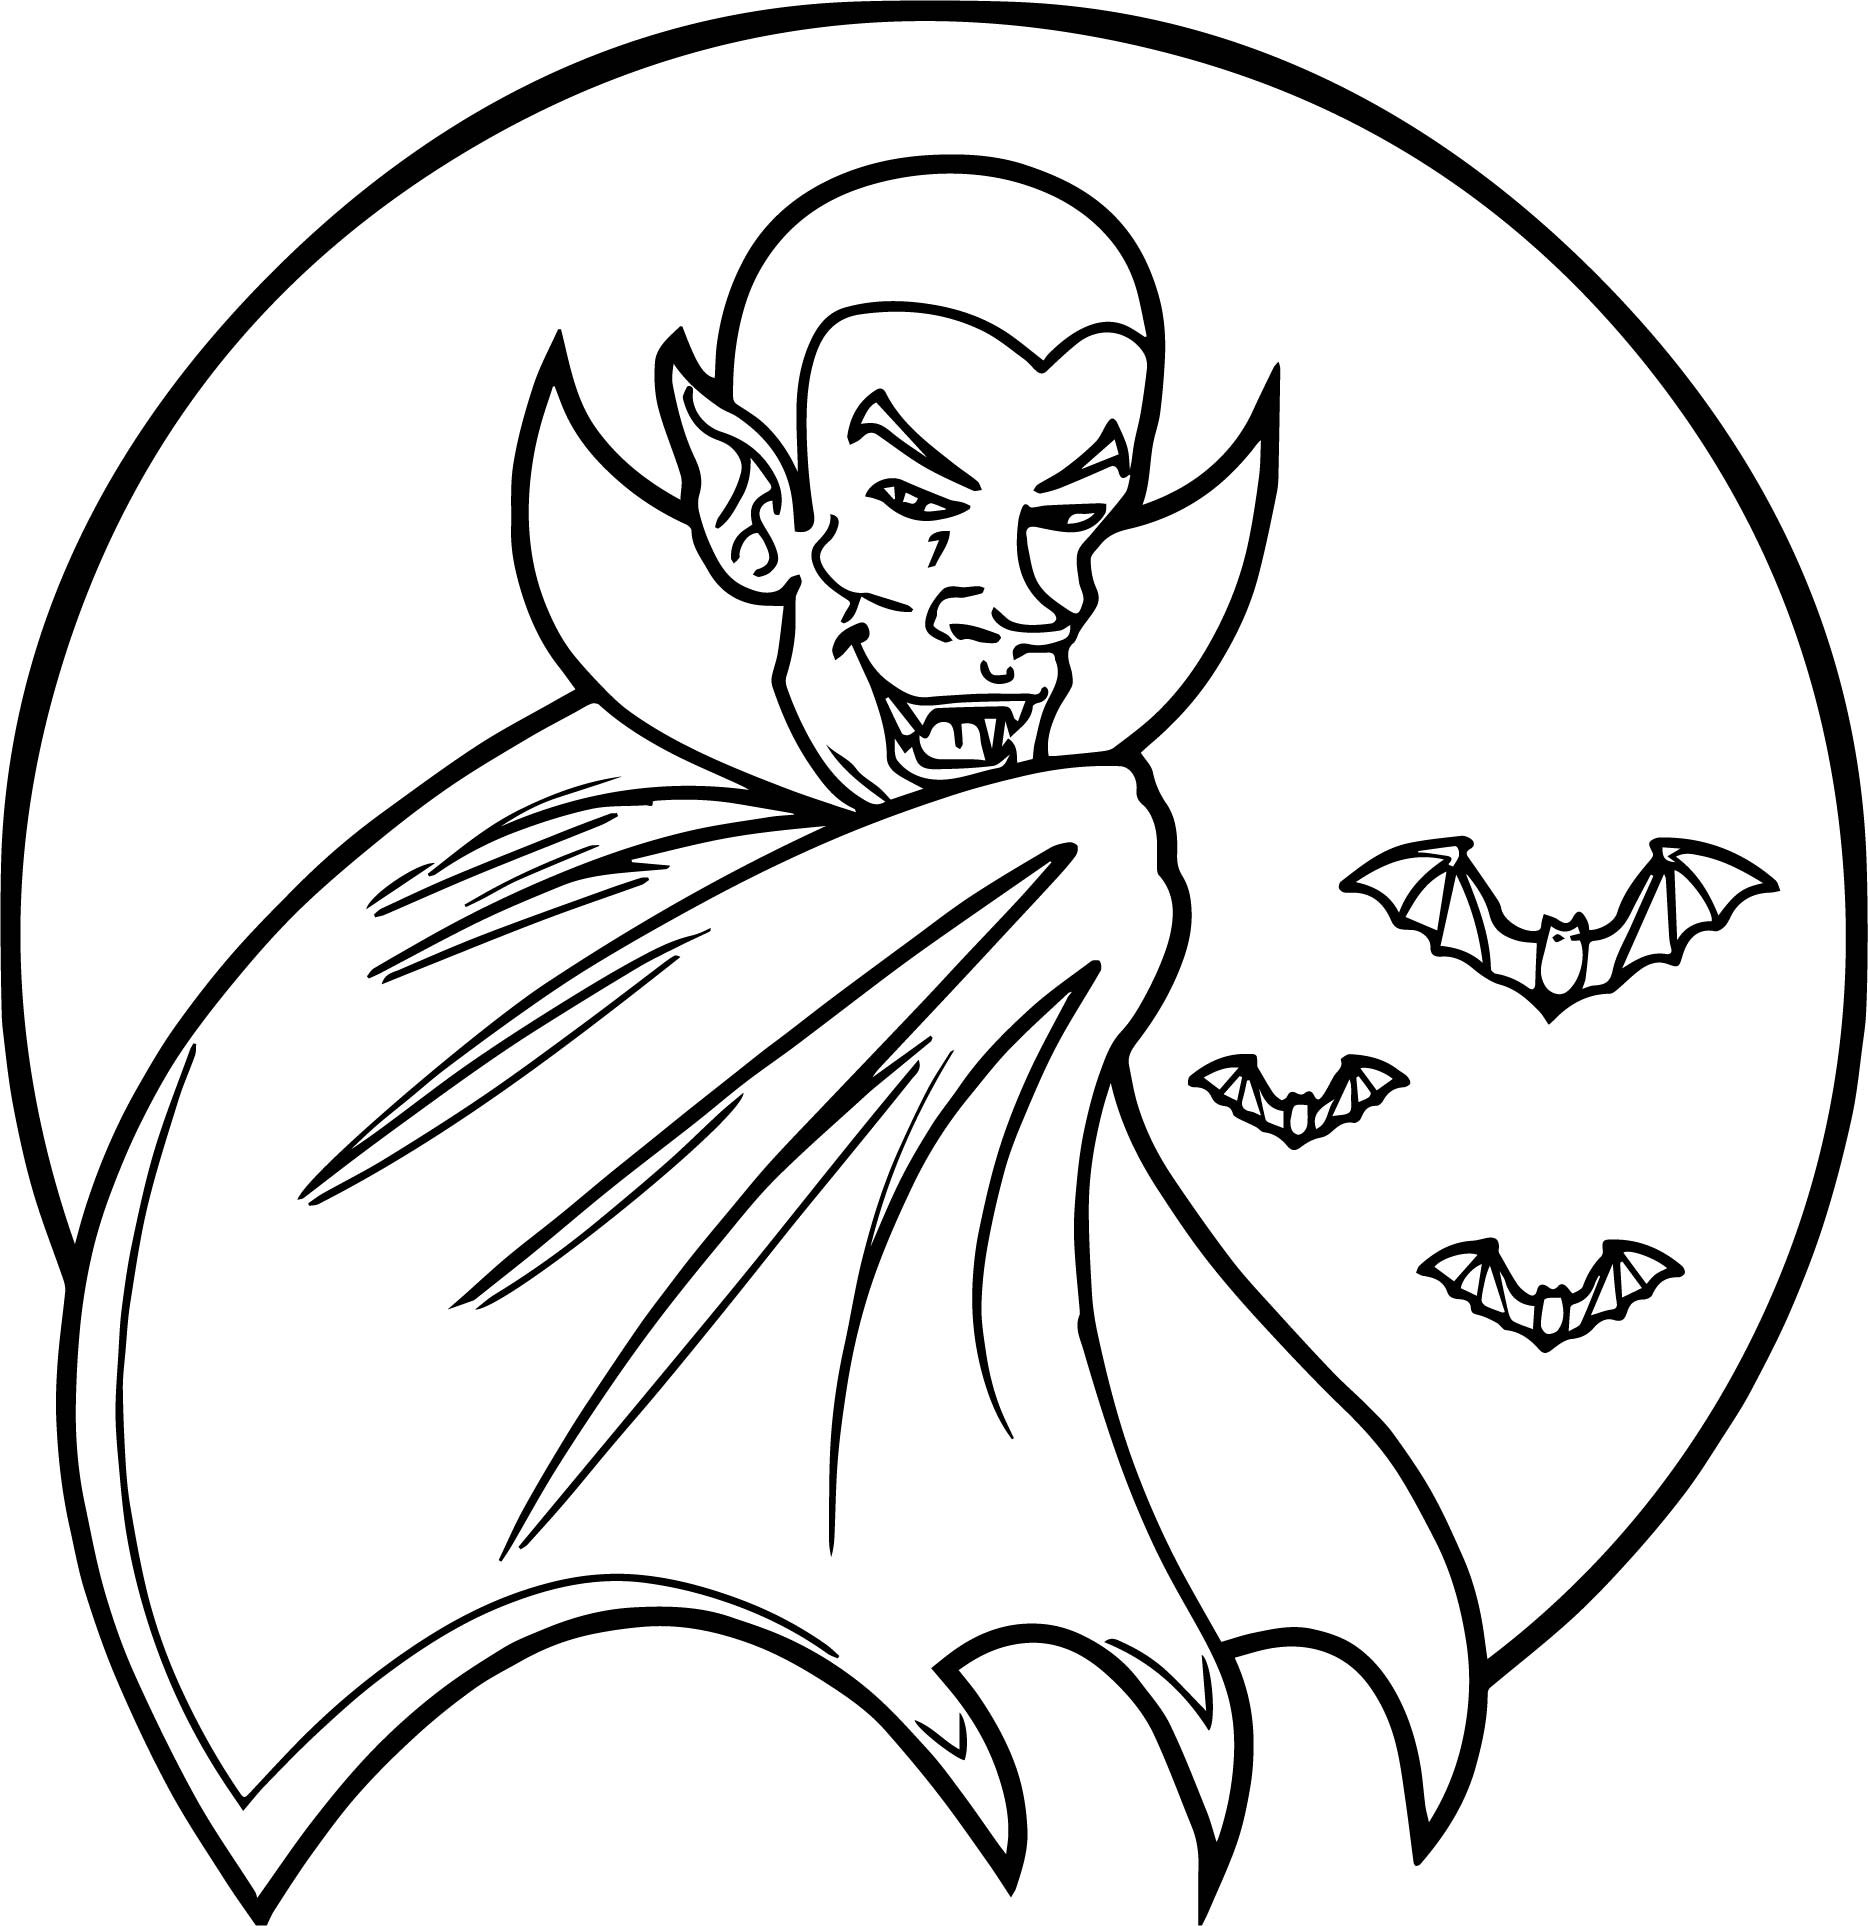 Baby Bat Coloring Pages
 Vampire Bat Coloring Page